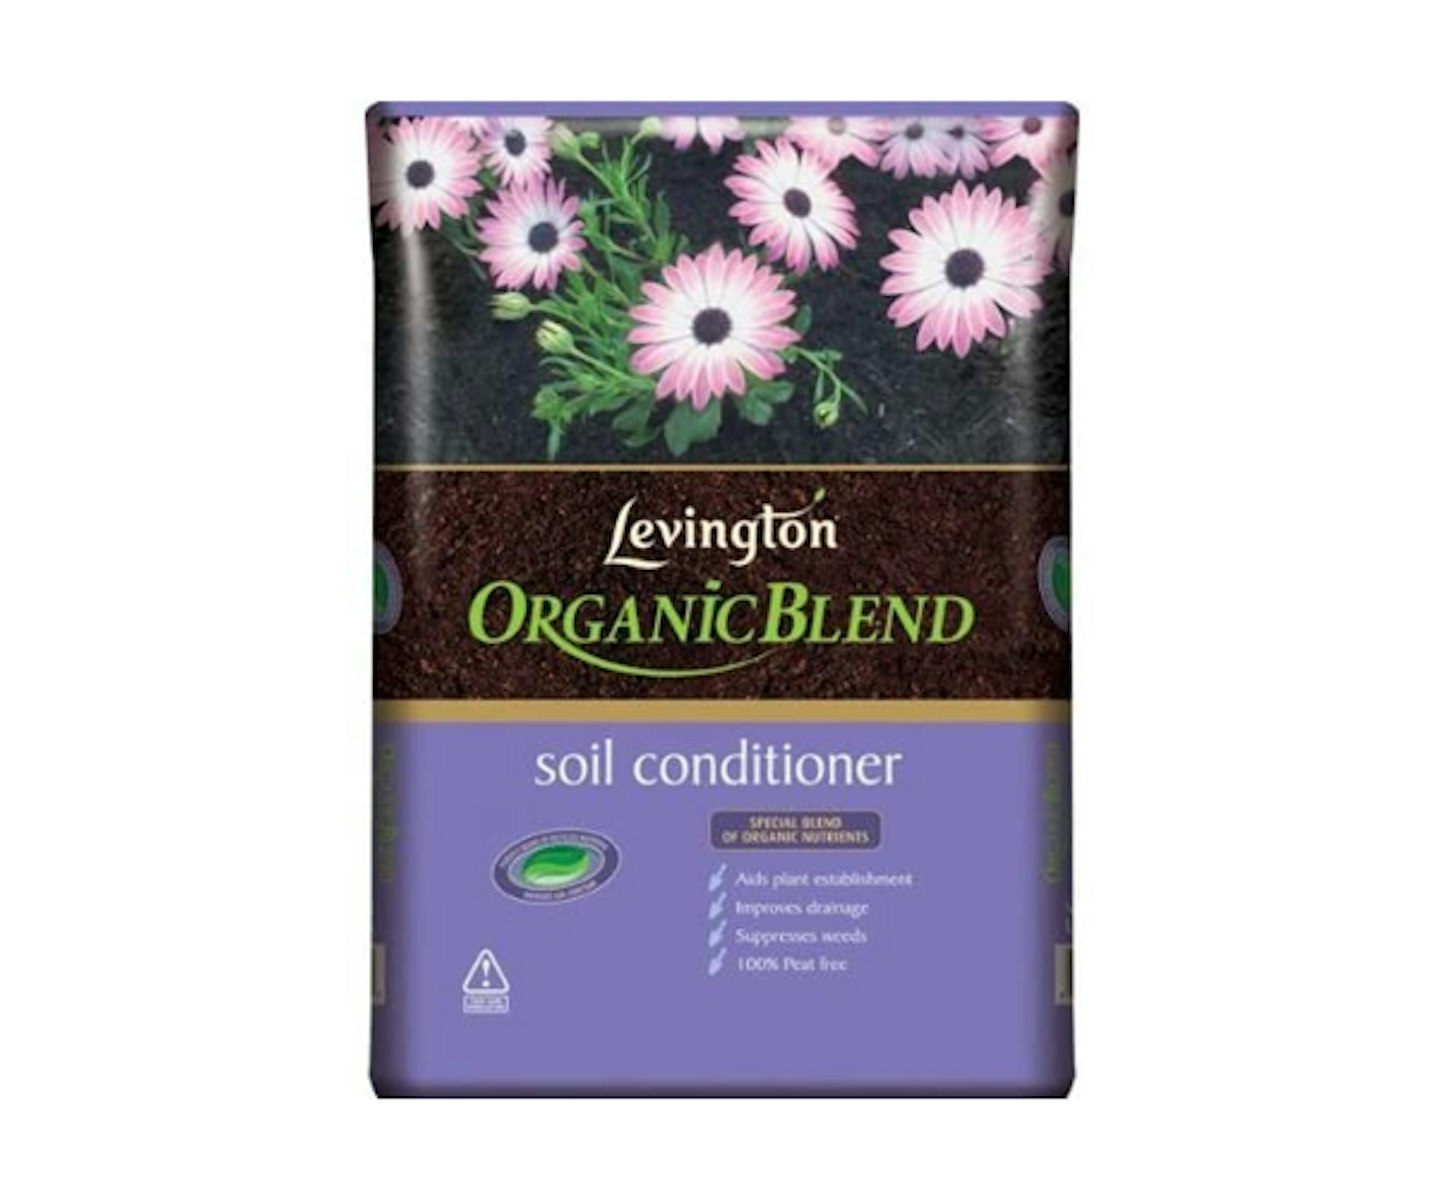 Levington Peat free Organic blend Soil Conditioner 50L